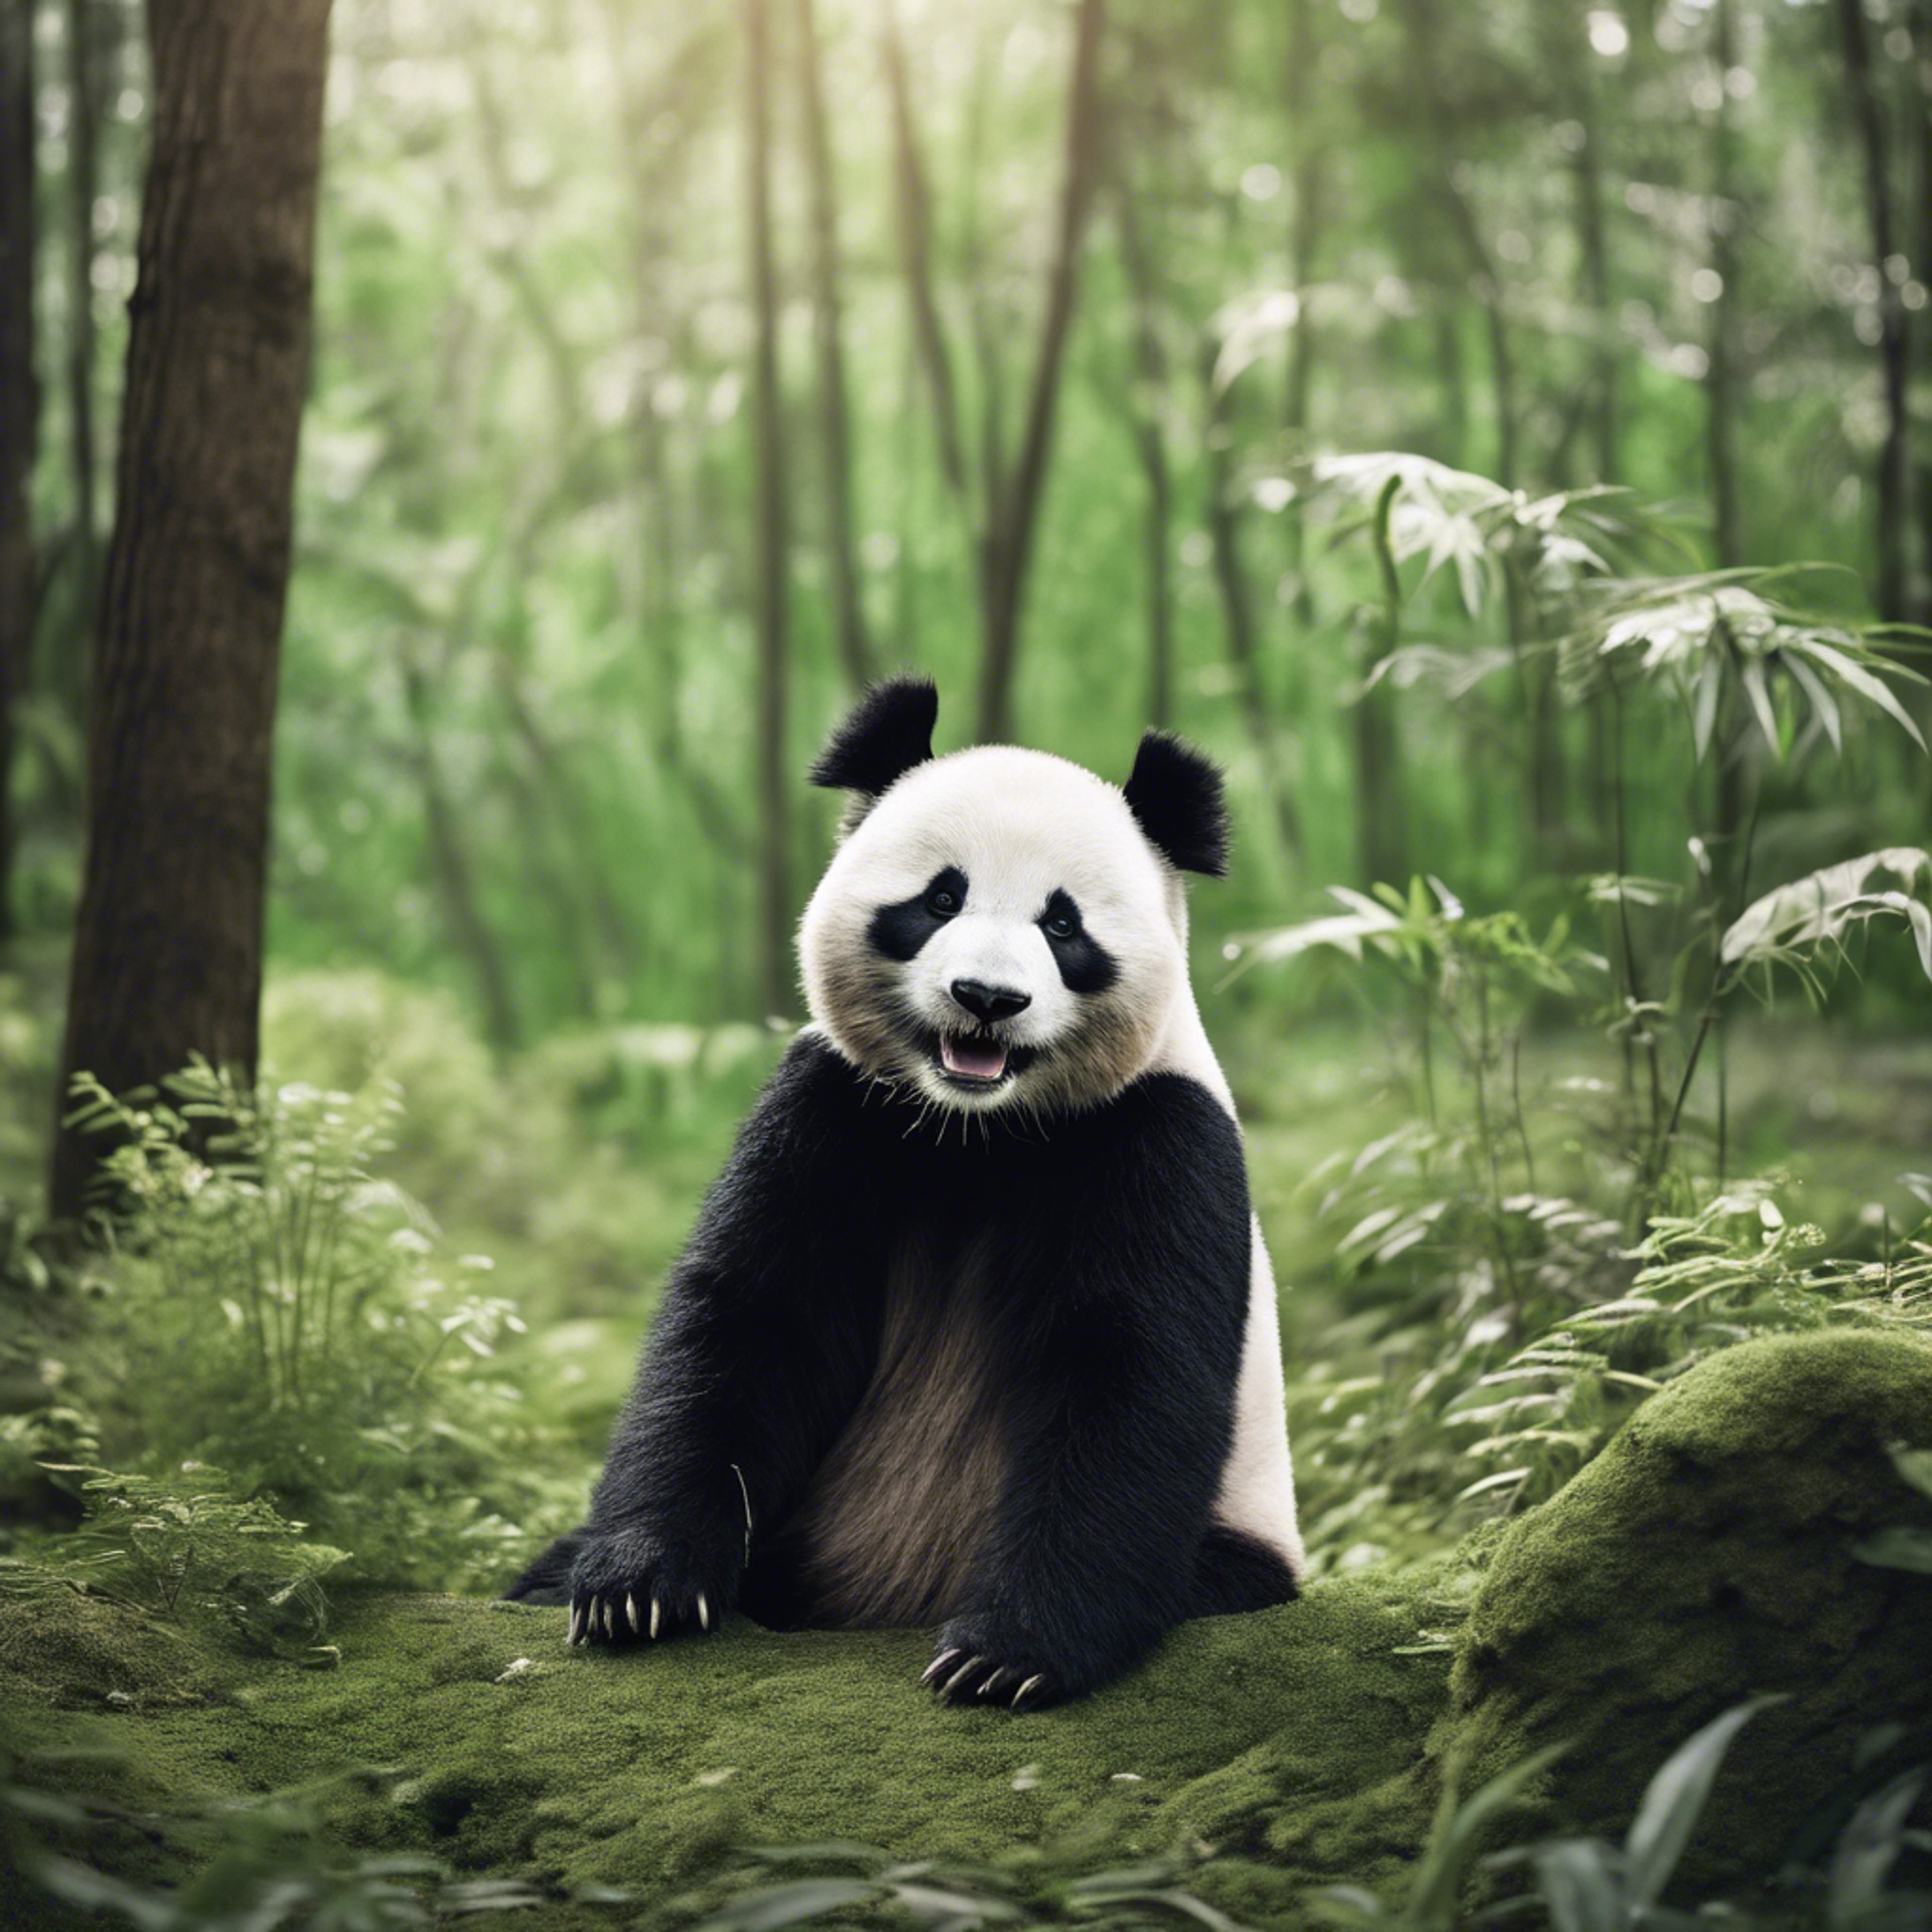 A laughing panda bear, celebrating a fun day in black, white and green wilderness. Tapet[a059d50594da43a98985]